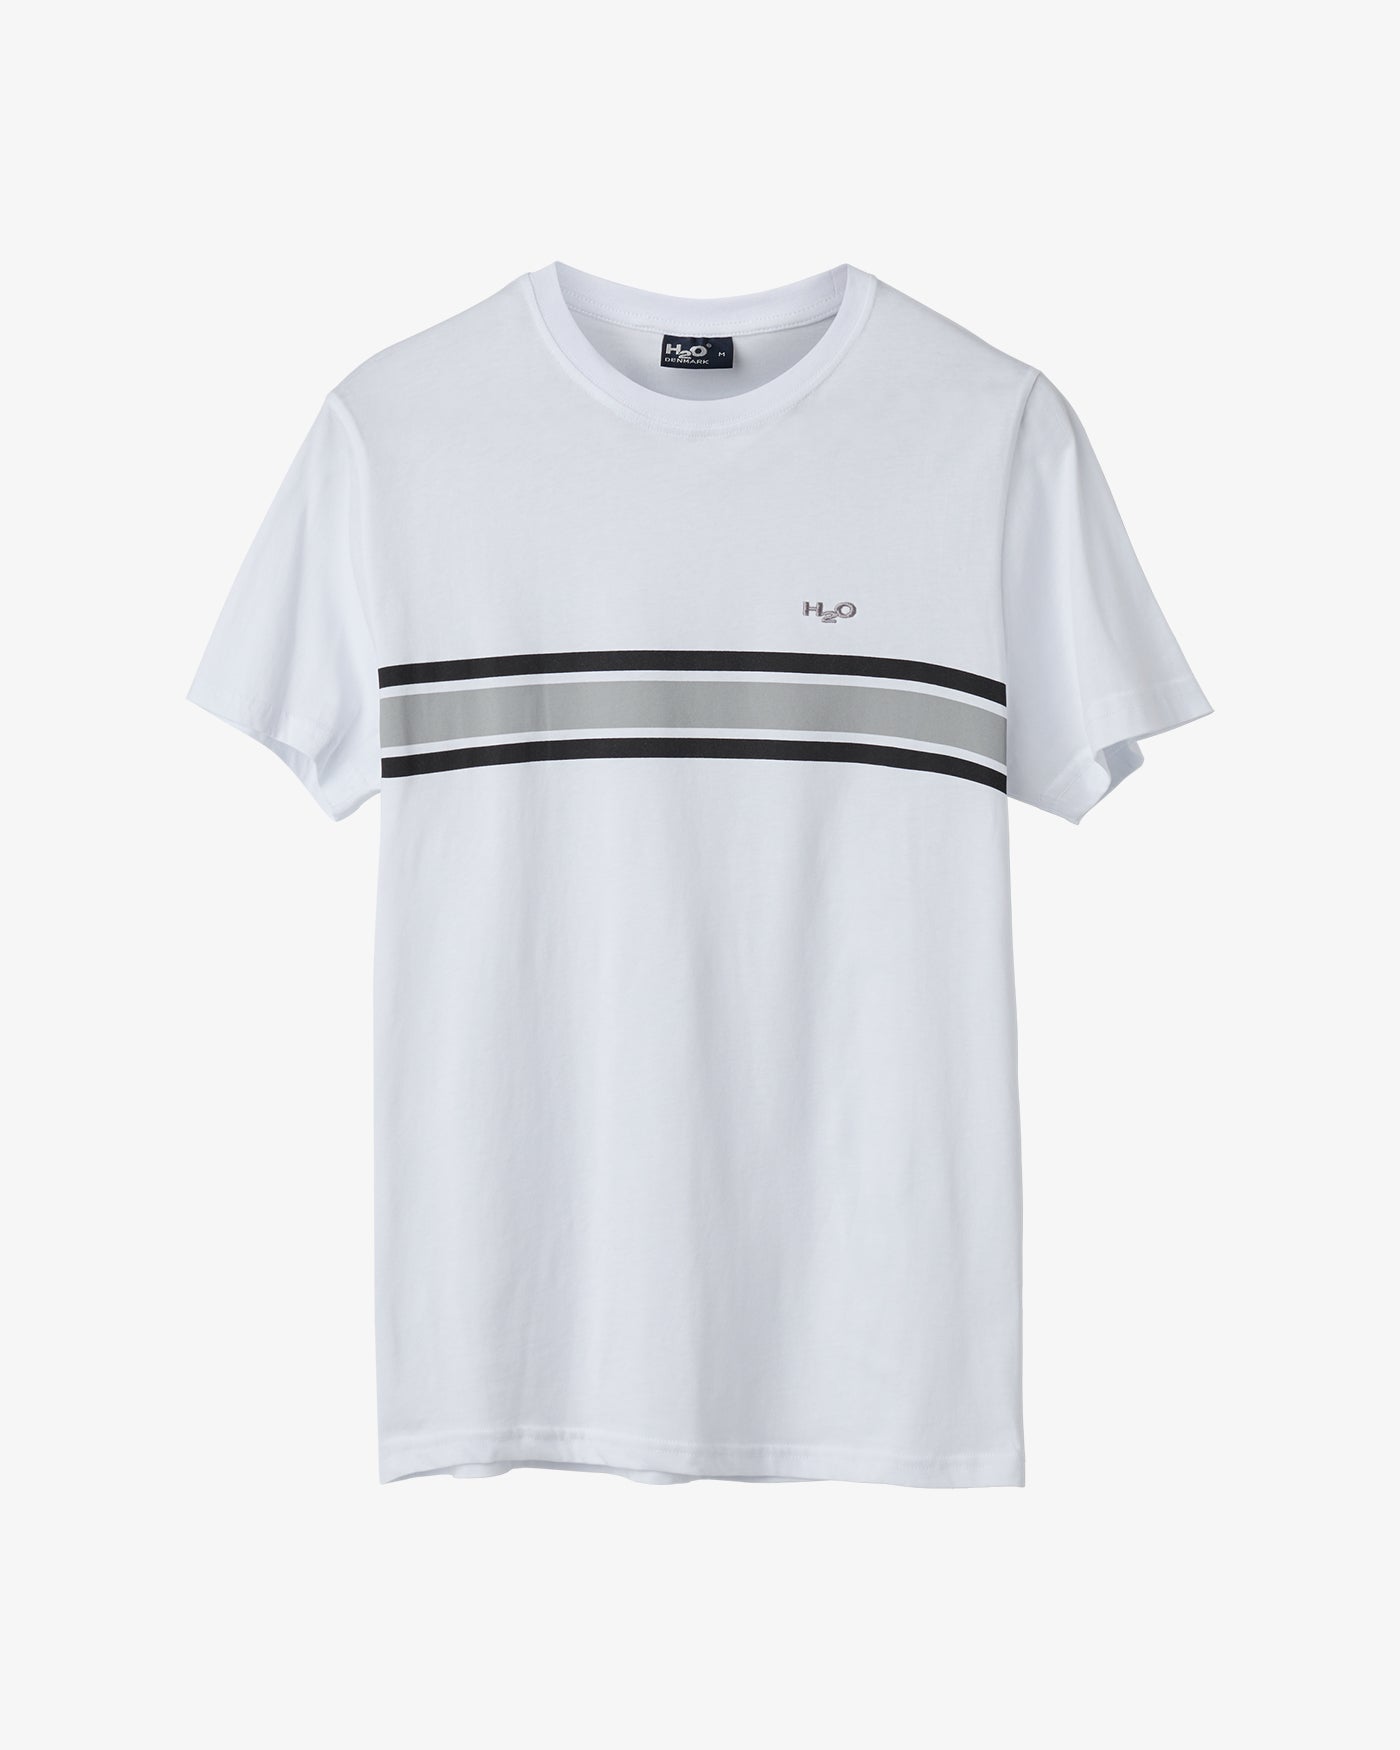 Gilleleje T-Shirt Damen - White/Black/Grey/Black